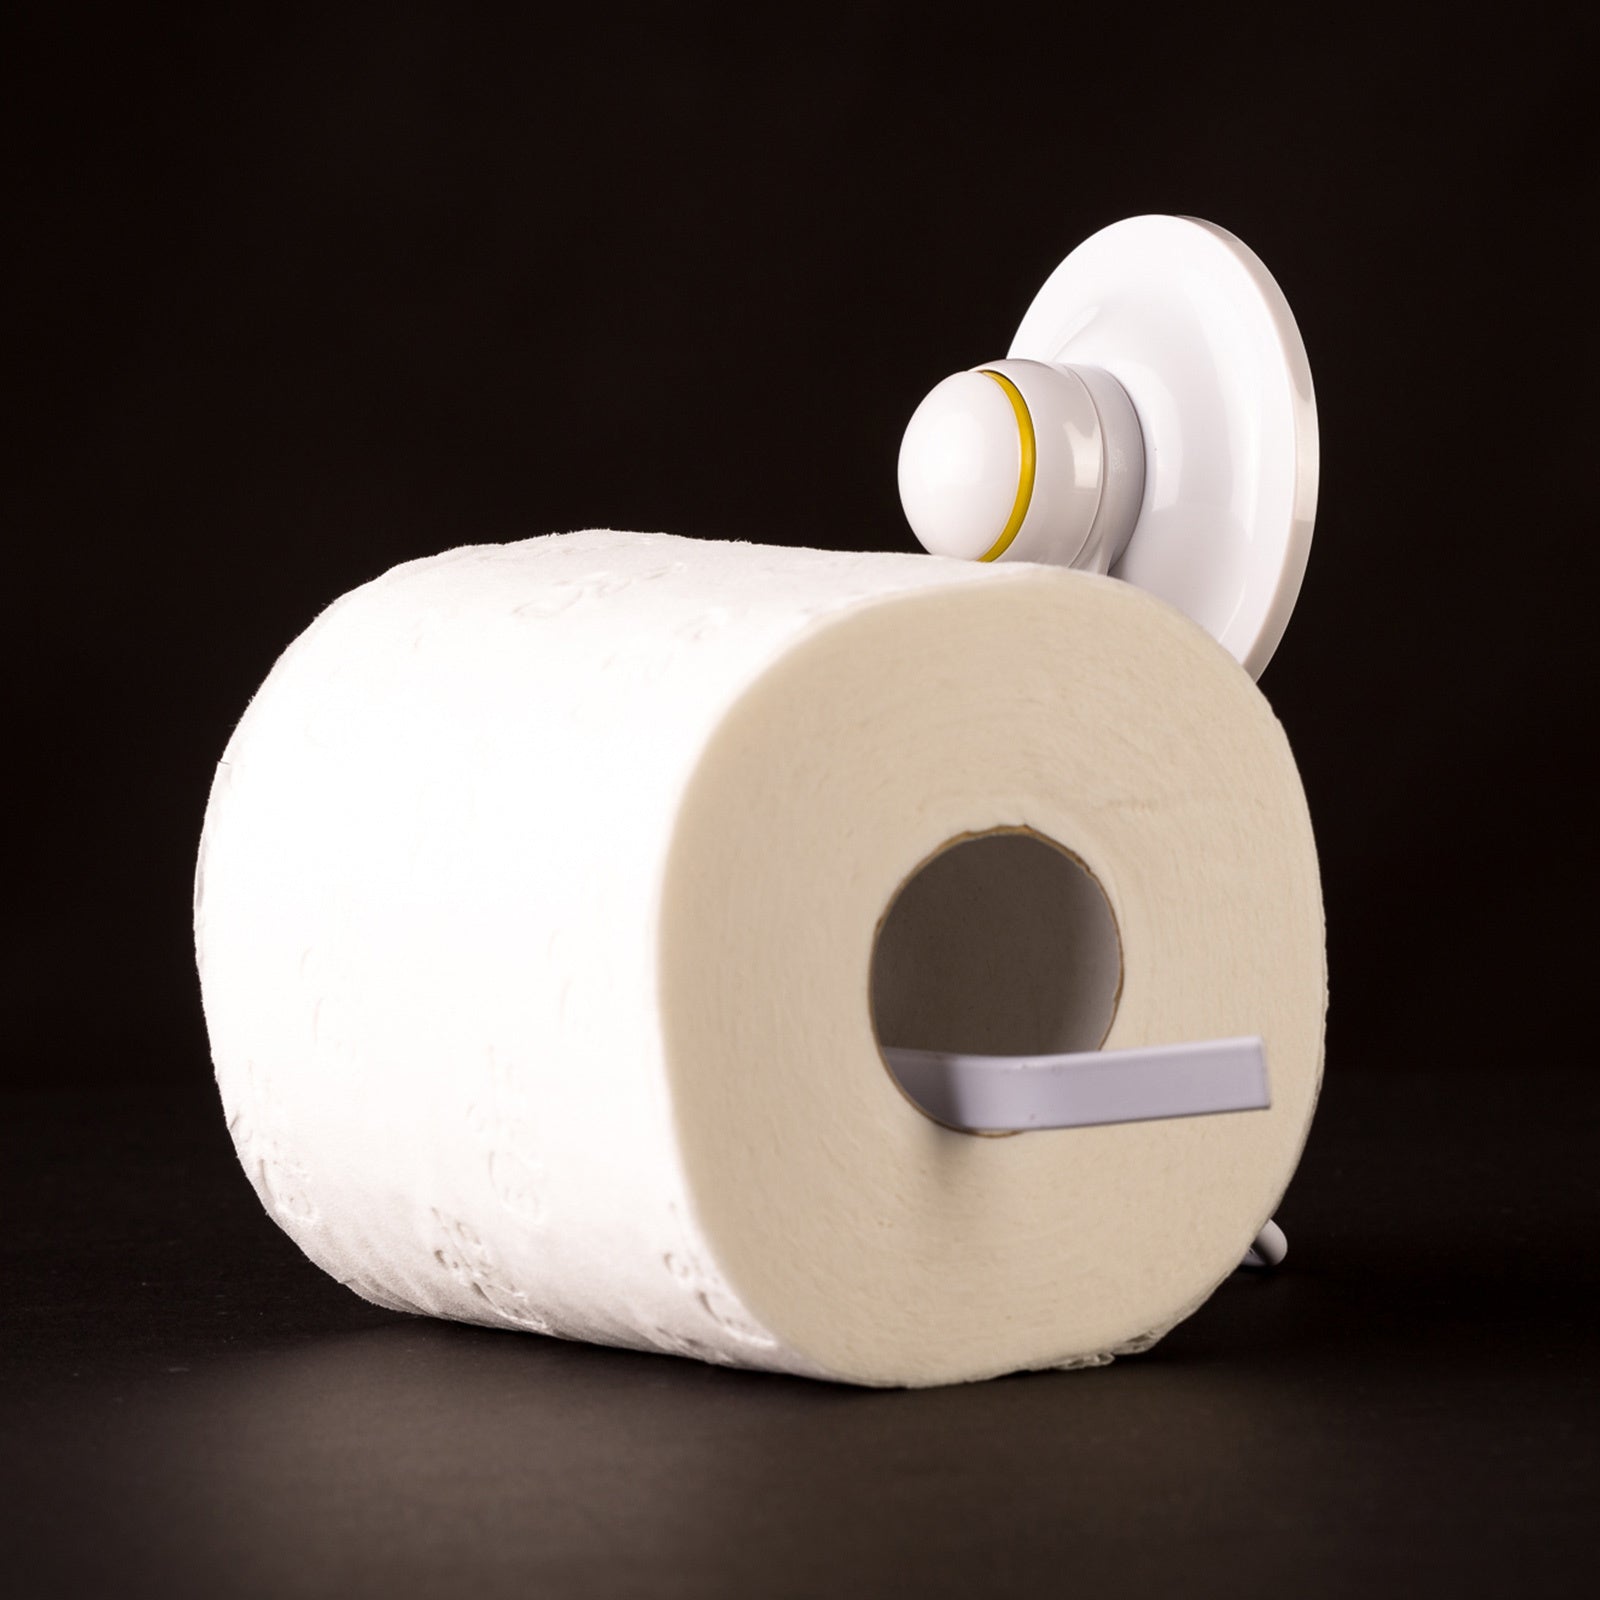 KiahLoc White Toilet Roll Holder Removable Suction Deals499